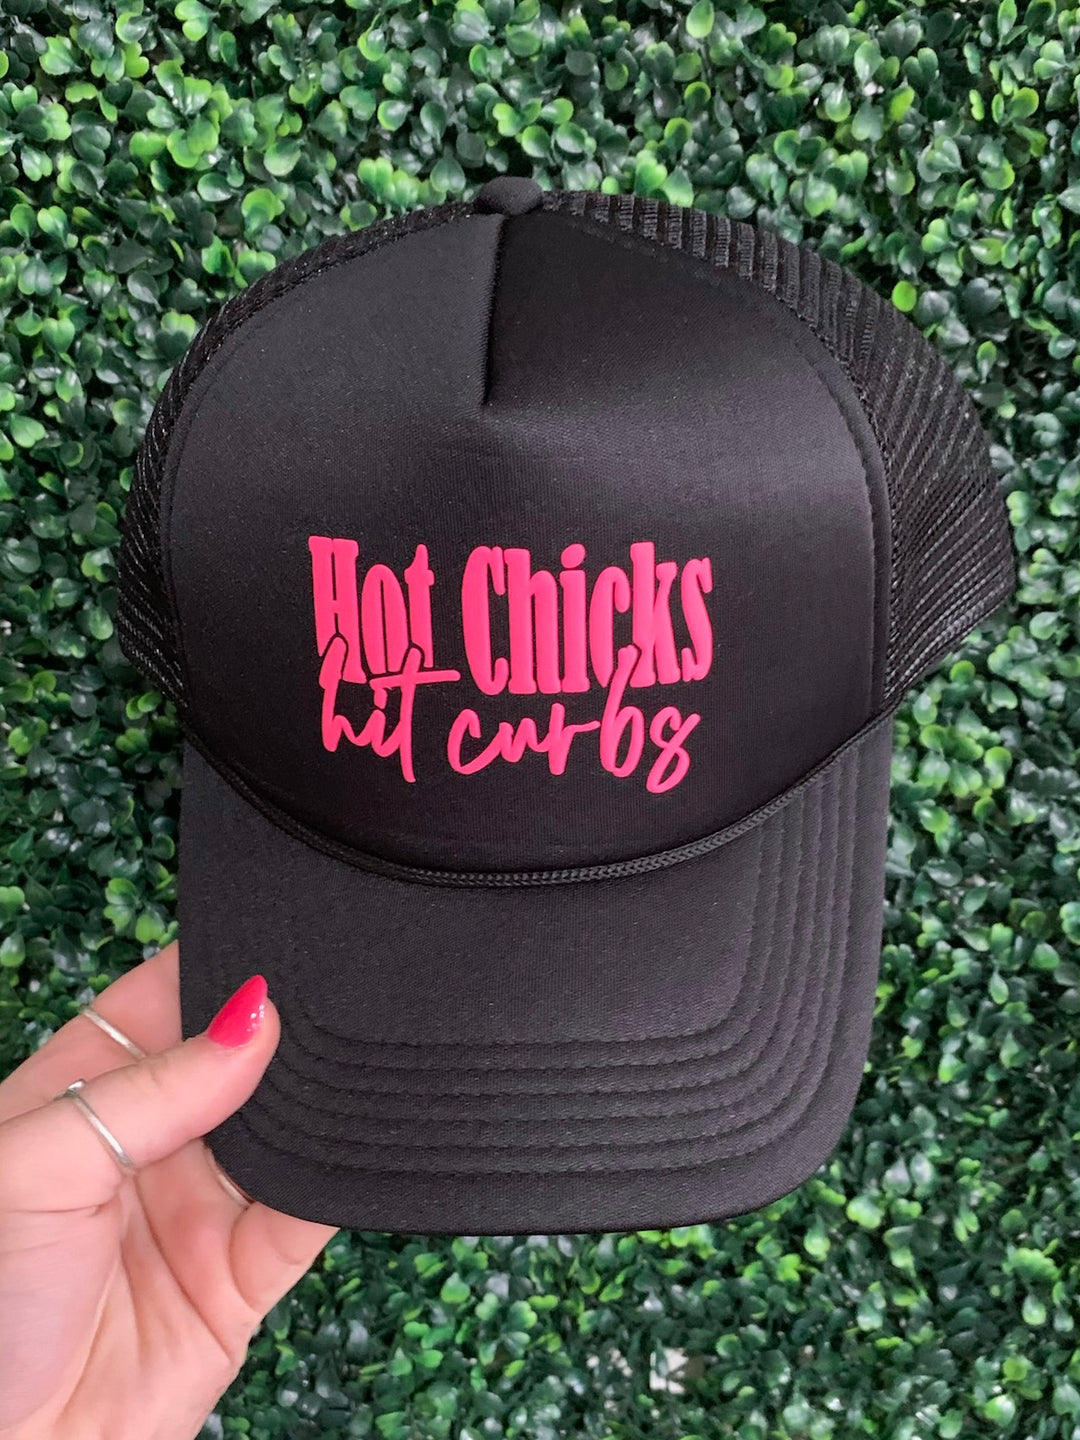 Hot Chicks Hit Curbs Trucker Hat